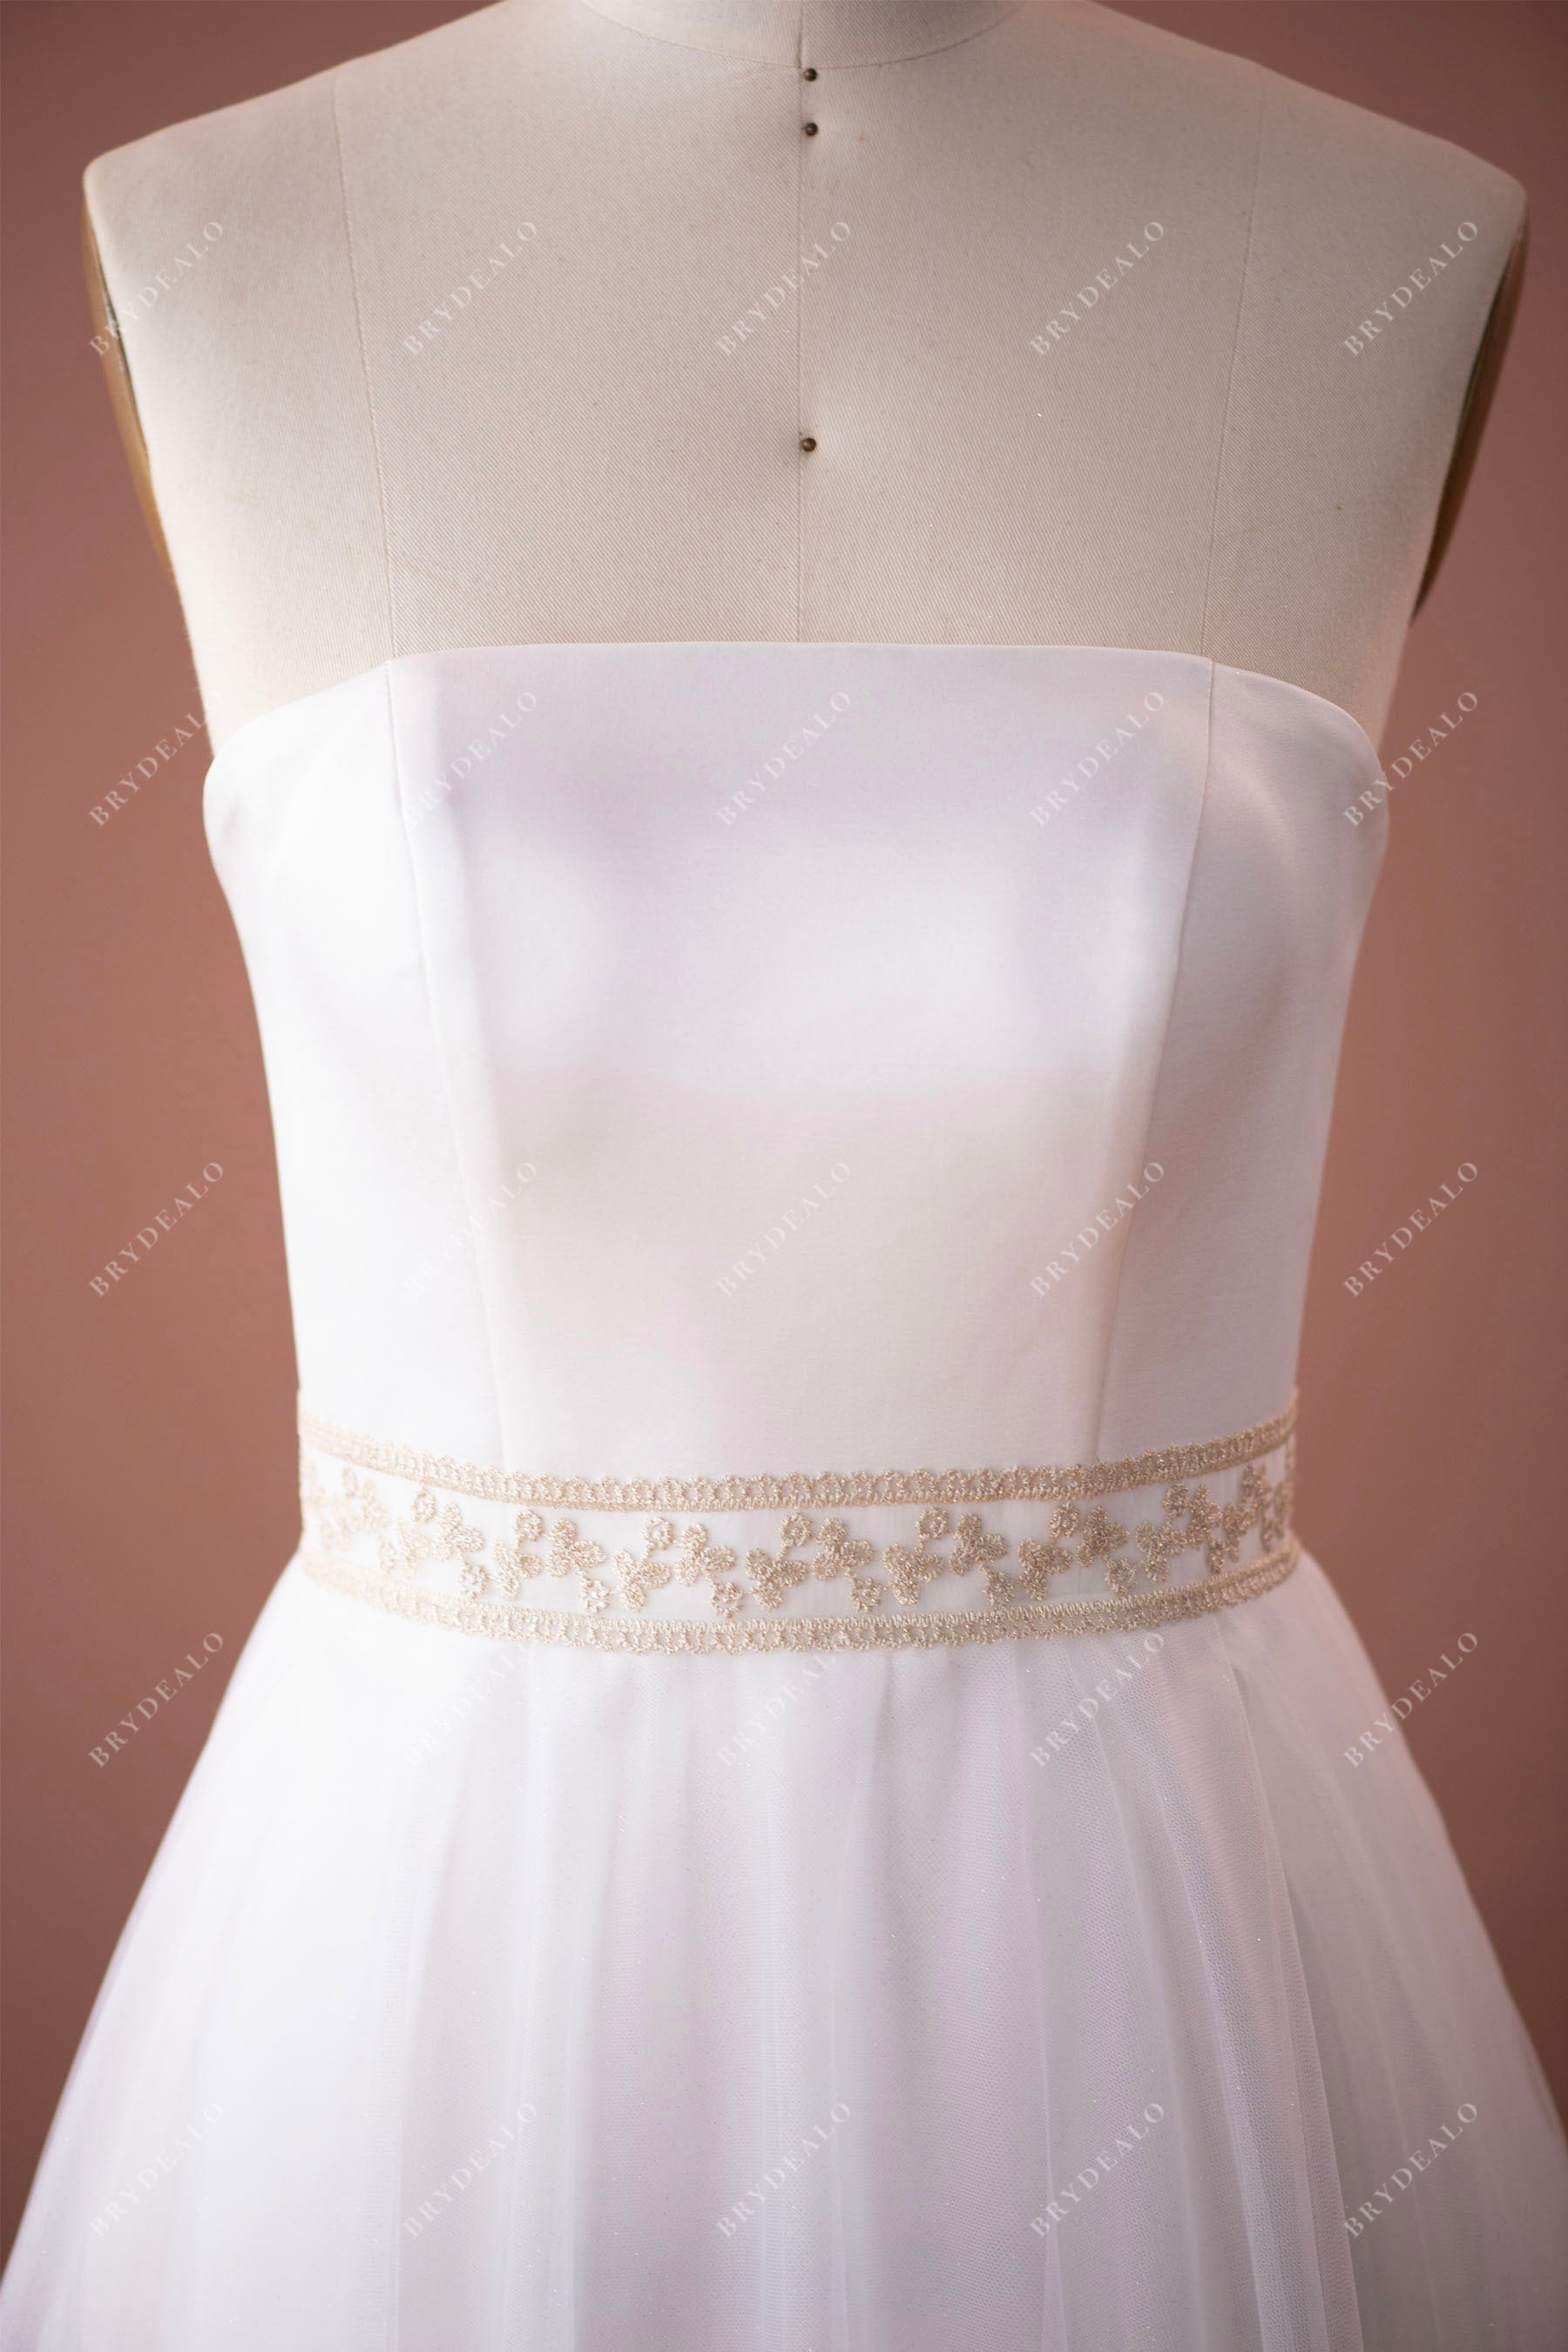 refined strapless straight across neck wedding dress 